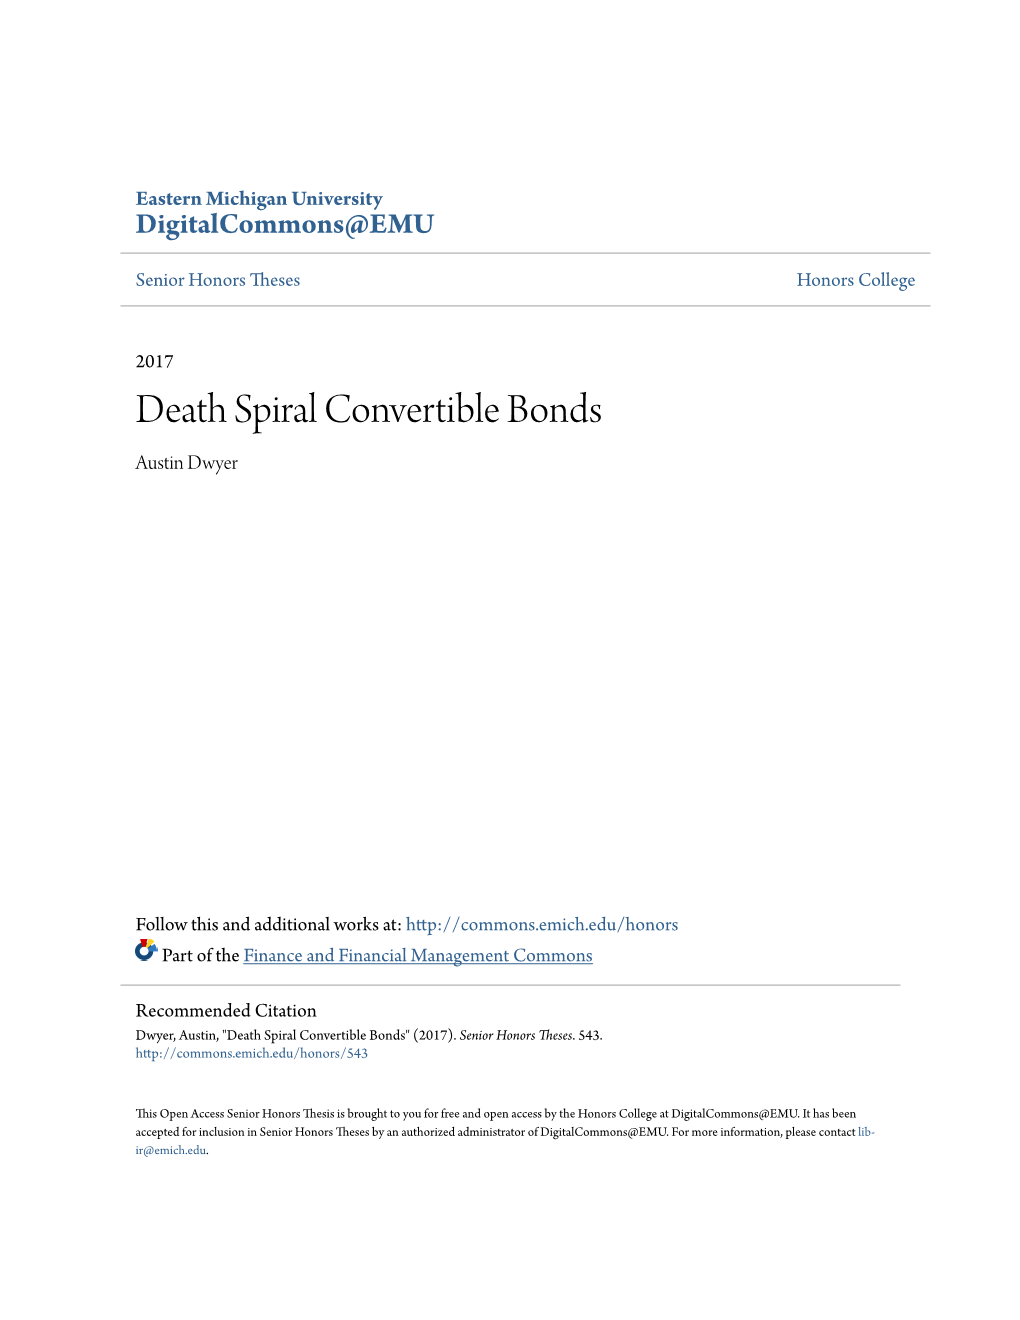 Death Spiral Convertible Bonds Austin Dwyer